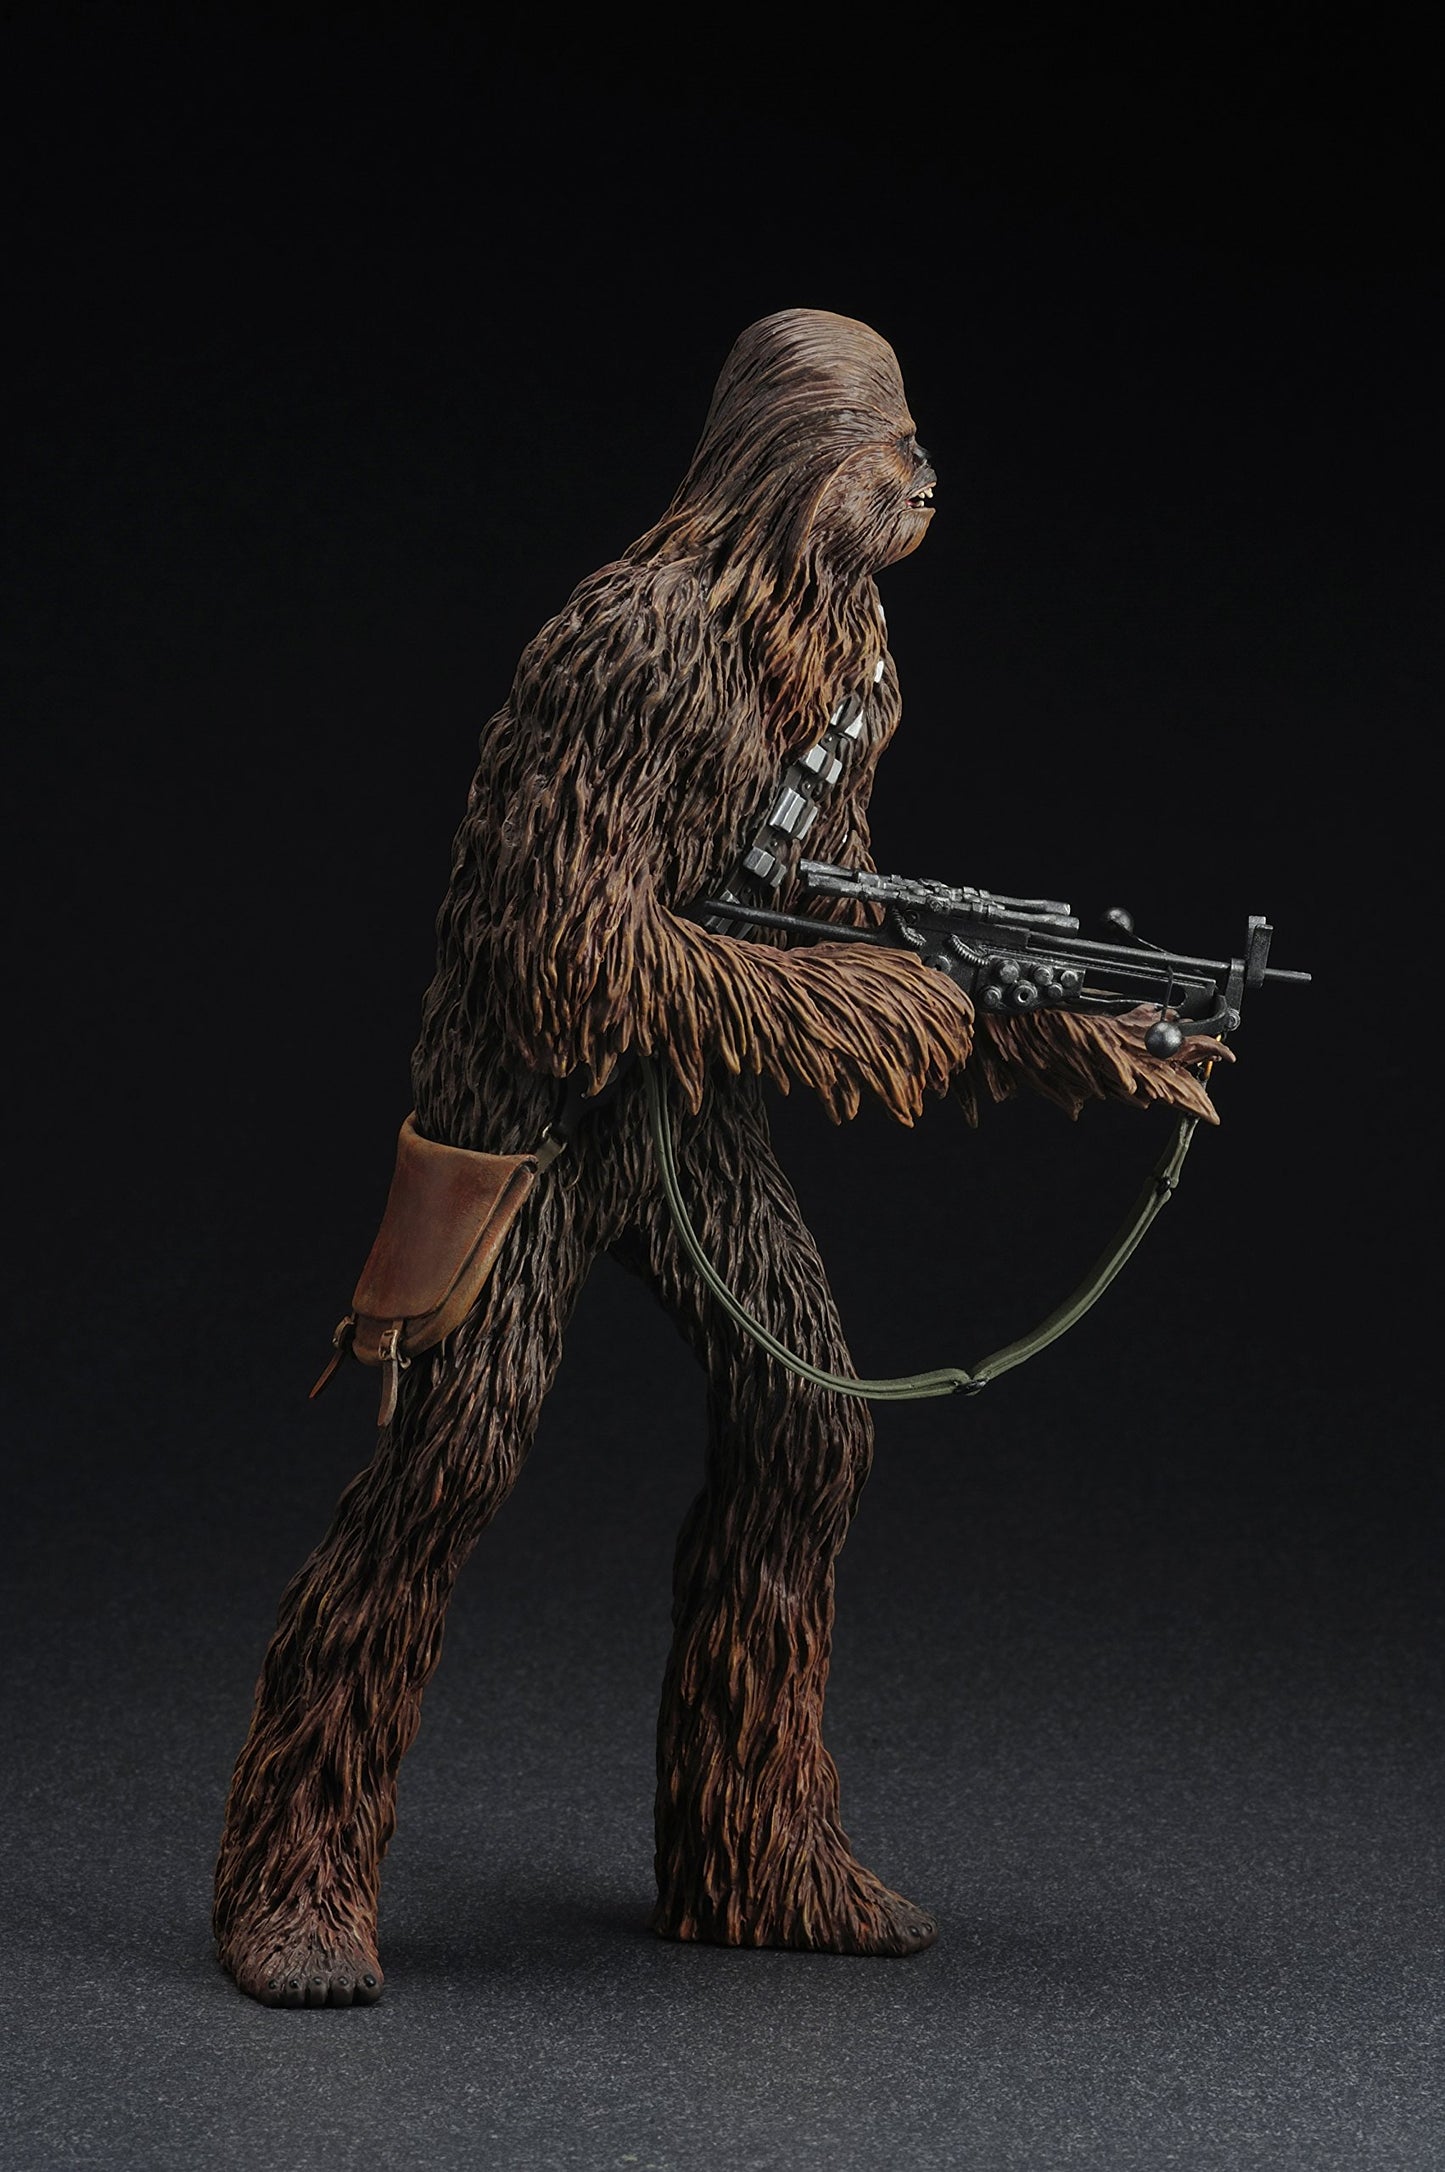 Kotobukiya Star Wars Han Solo and Chewbacca Artfx+ Statue